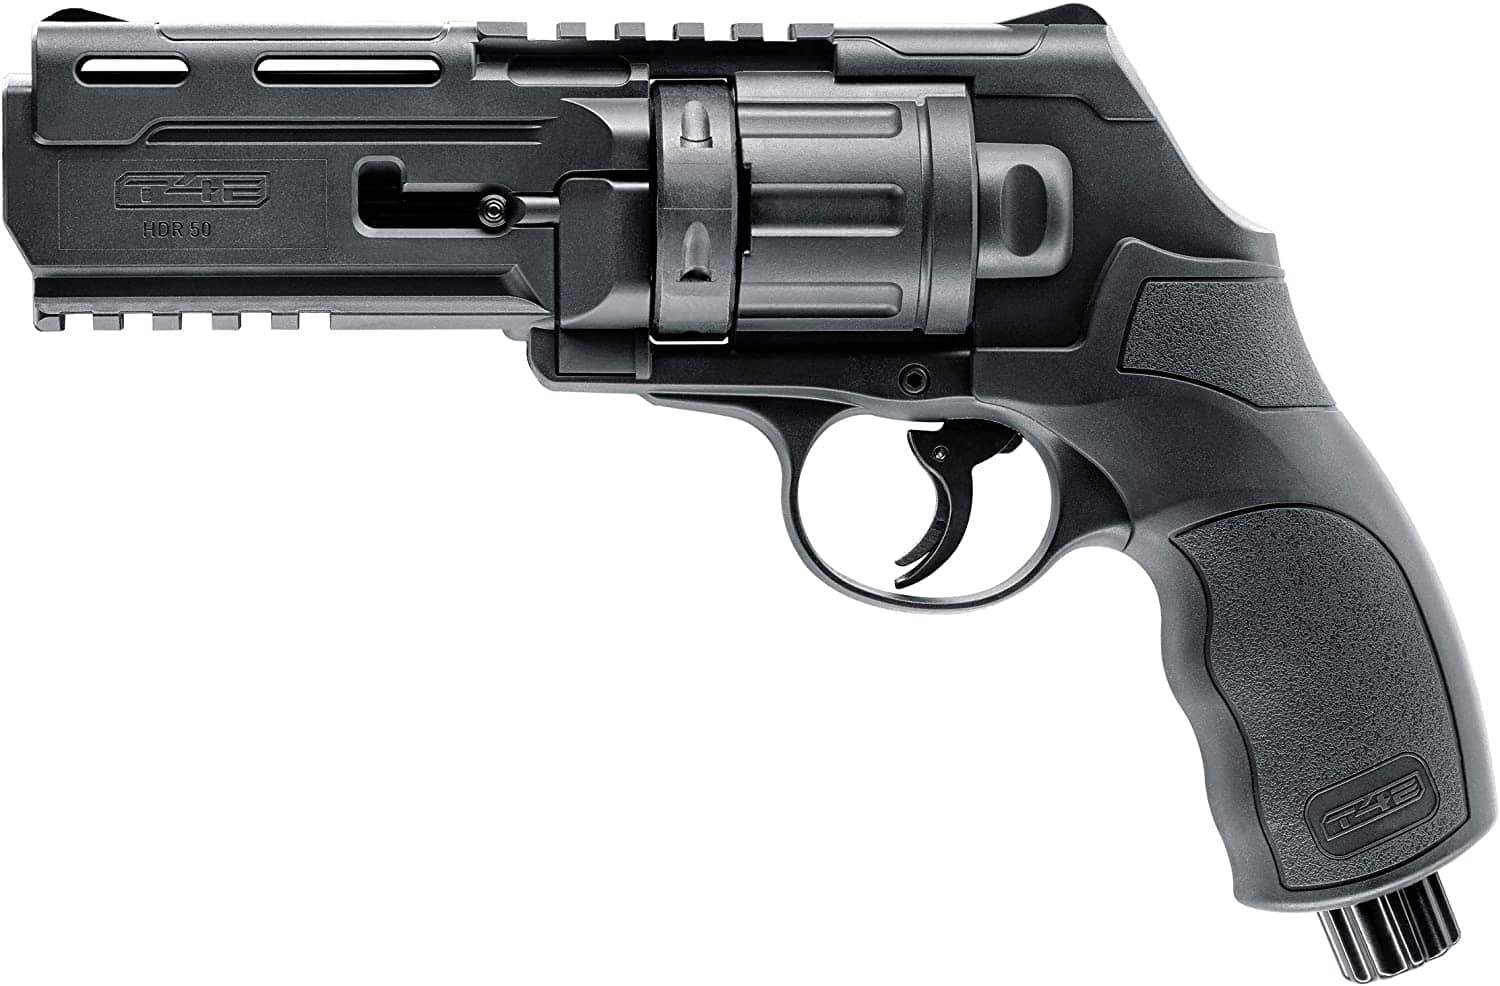 The Umarex TR50: The Ultimate .50 Caliber C02 Revolver